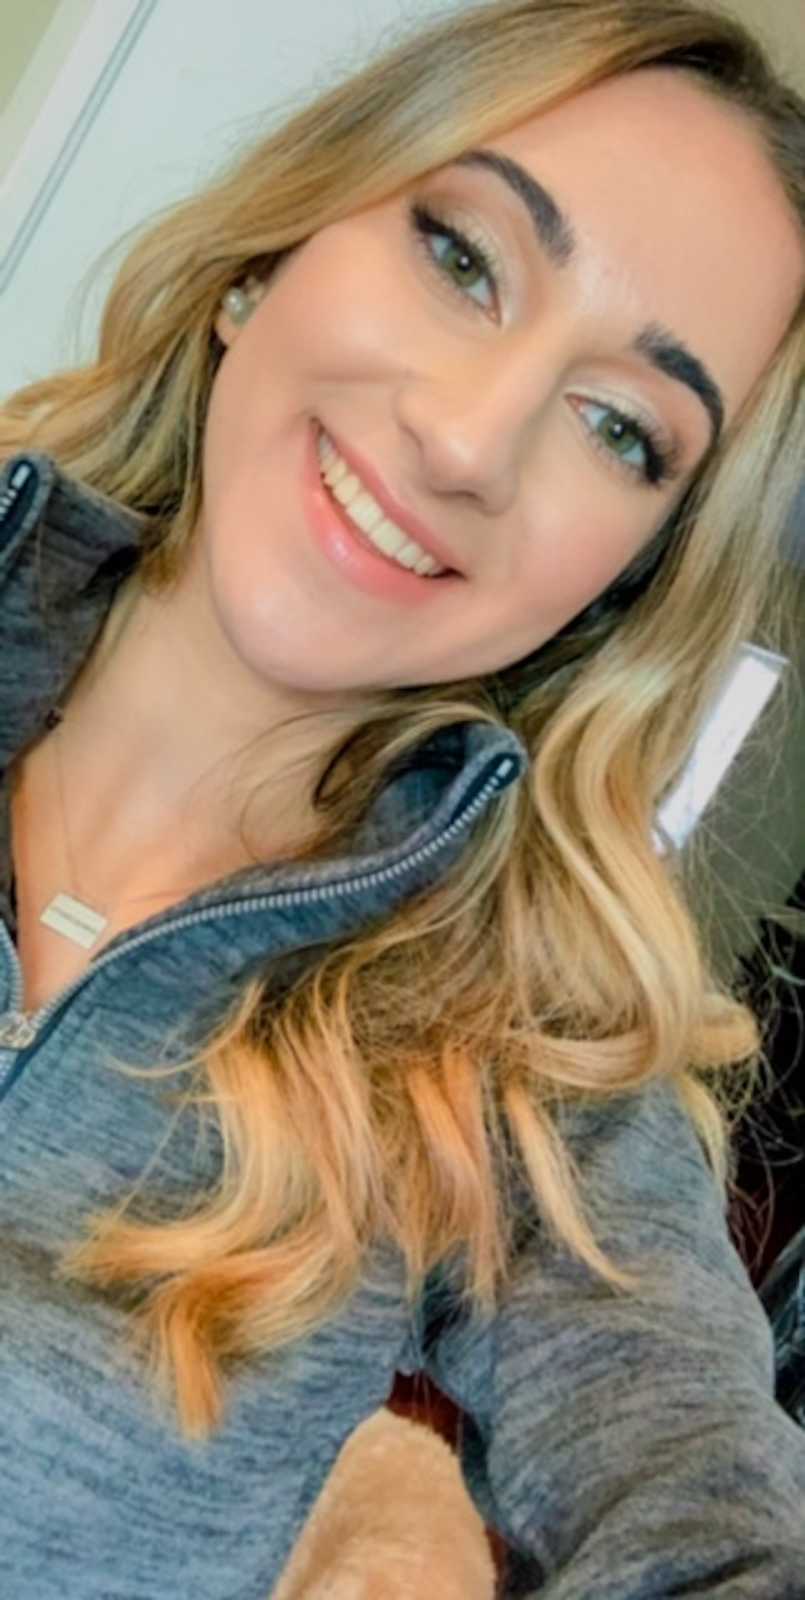 selfie of girl smiling